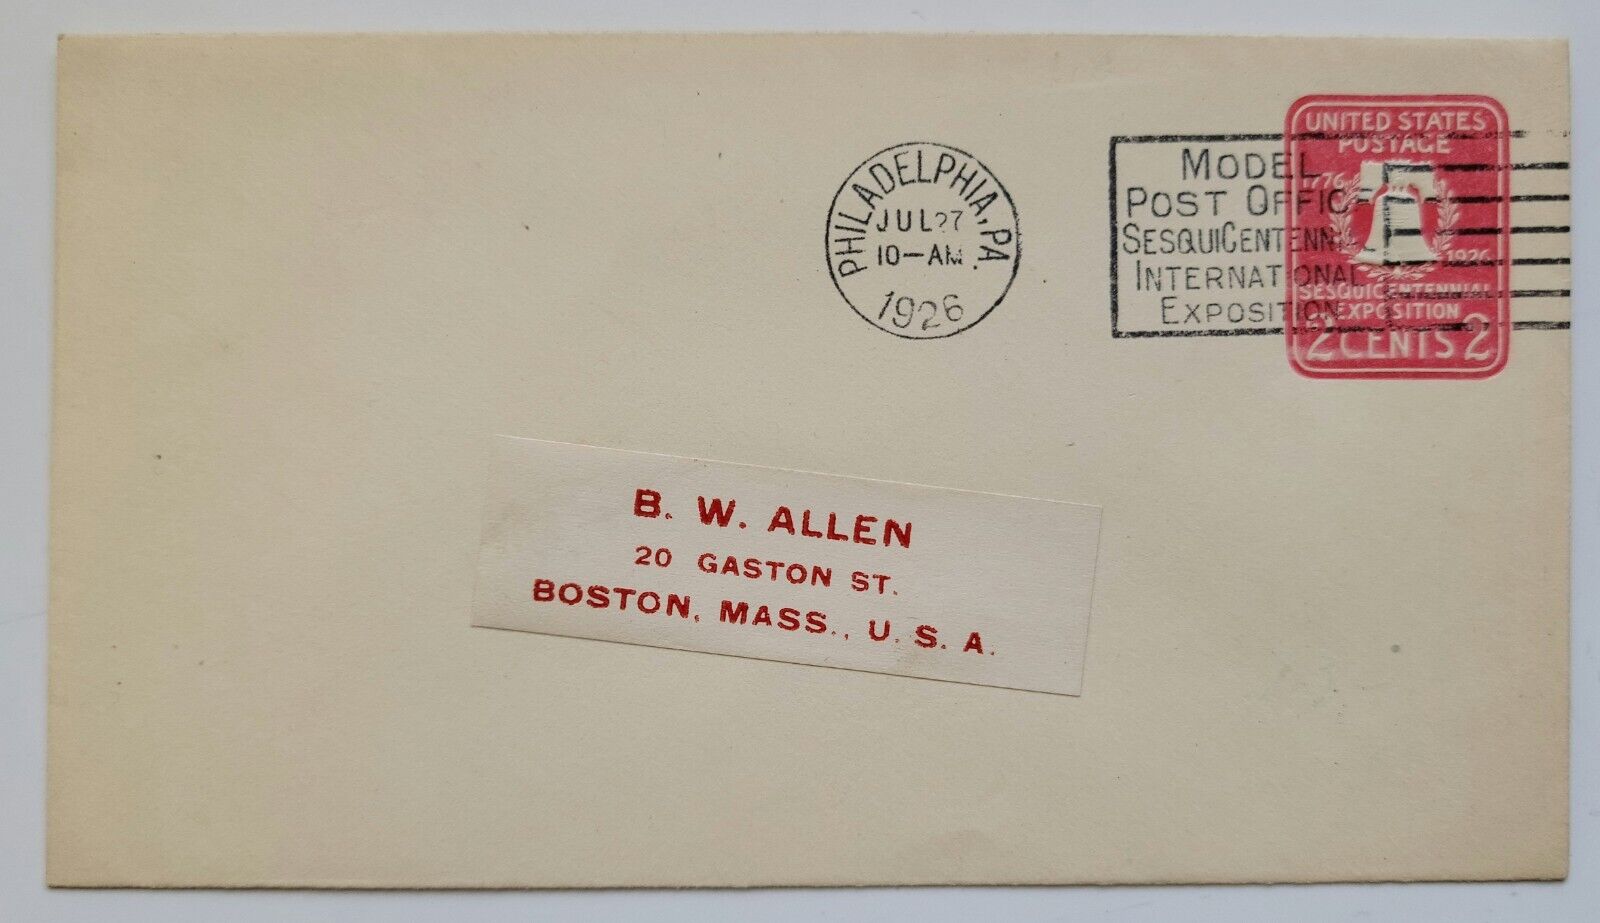 1926 Sesquicentennial International Expo Model Post Office 2 Cents Envelope Mass